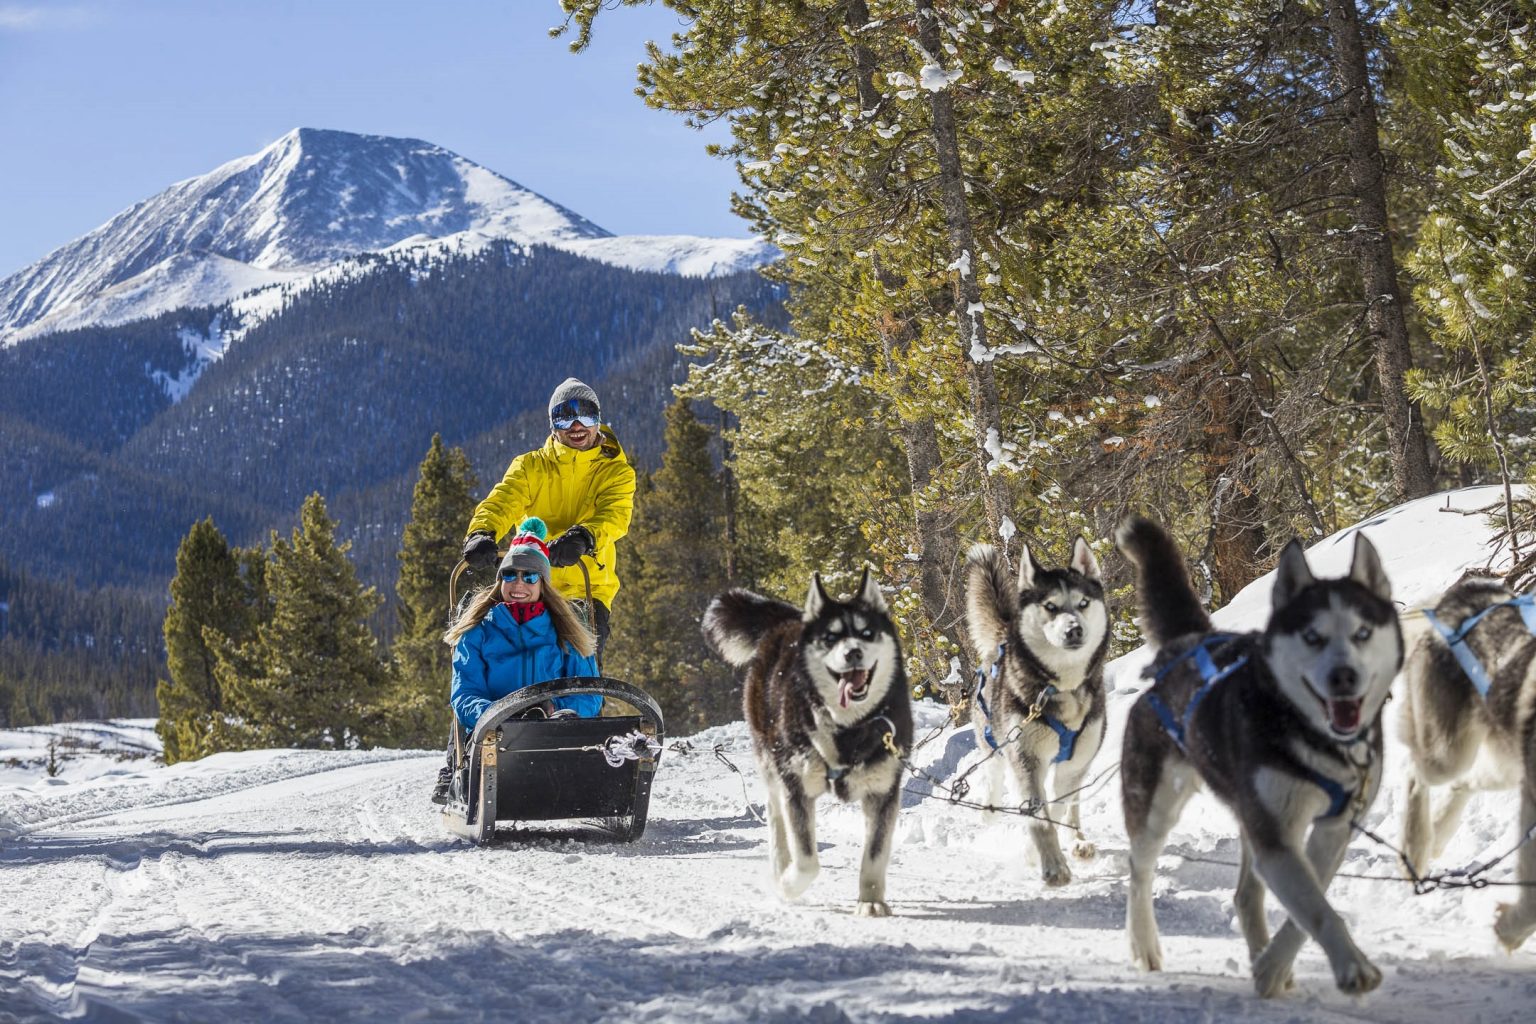 A guided dog sledding adventure through the snow at Breckenridge